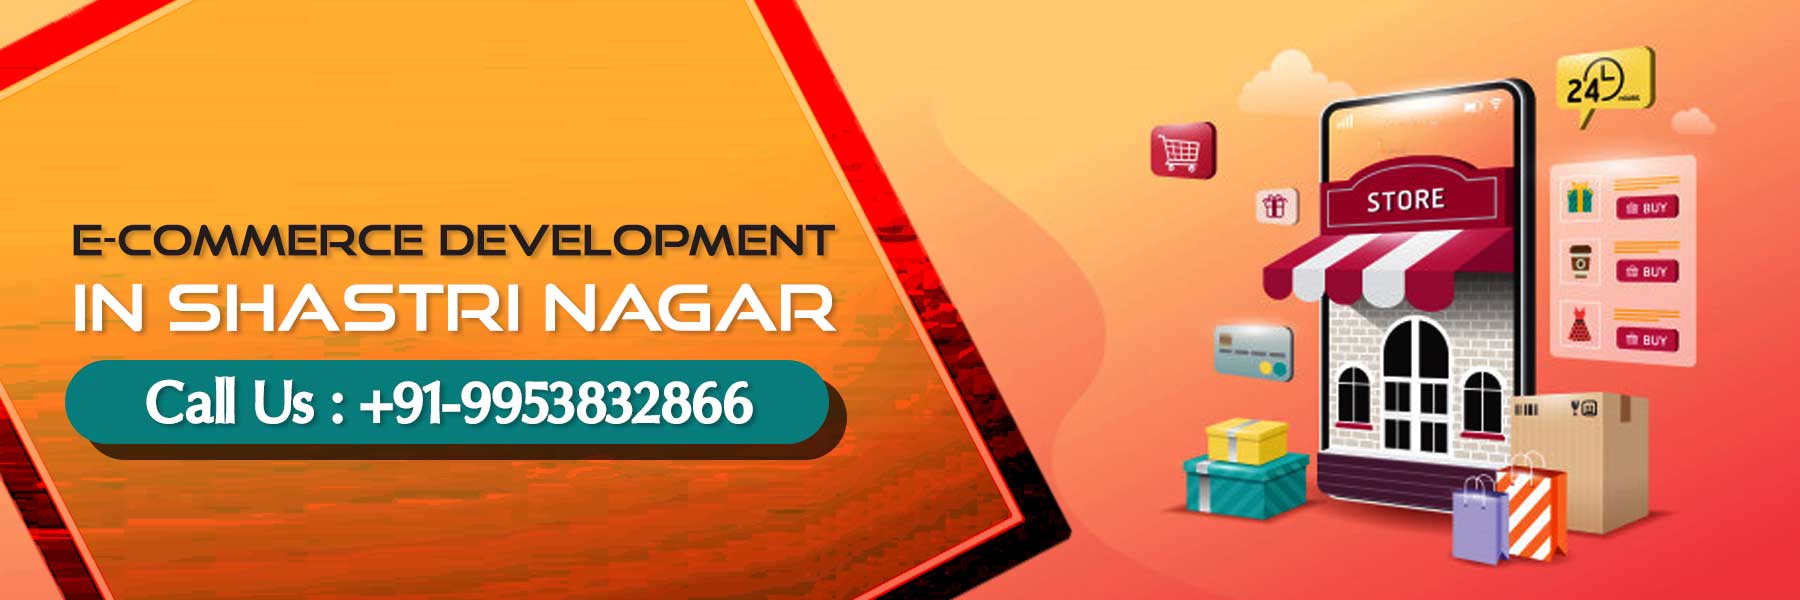 ecommerce development in Shastri Nagar